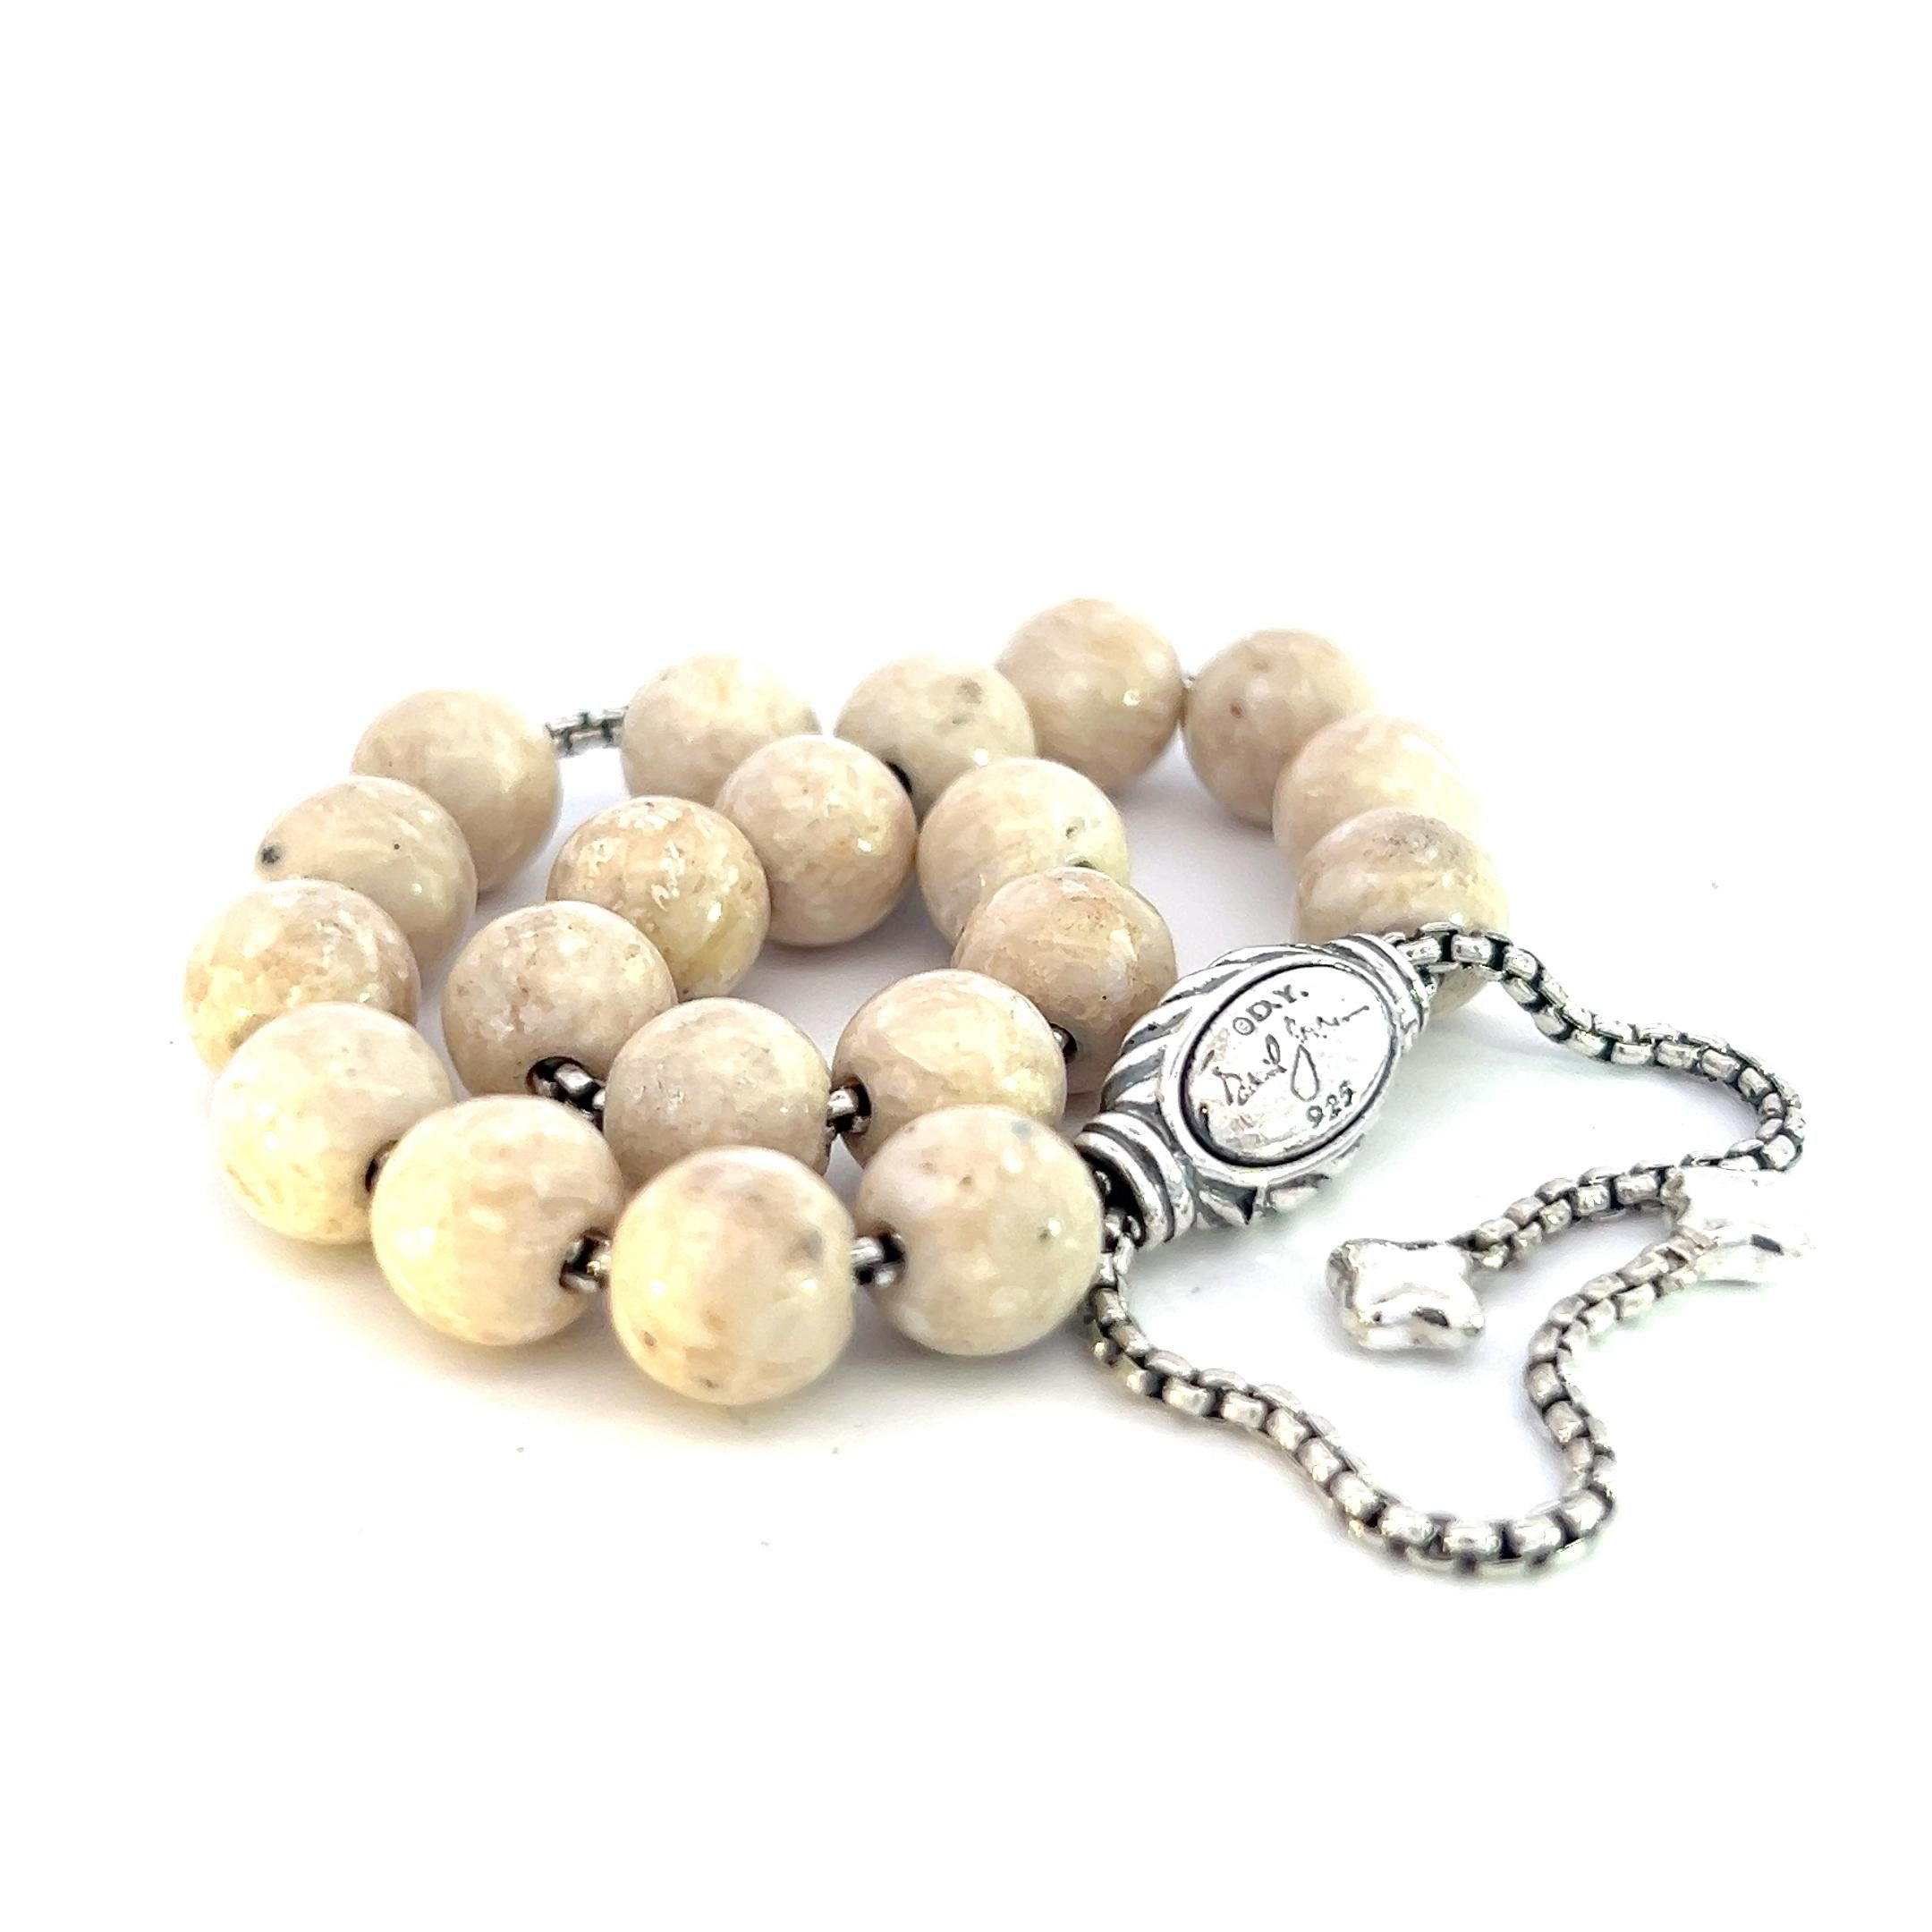 Women's David Yurman Authentic Estate River Stone Spiritual Beads Bracelet 6.6 - 8.5